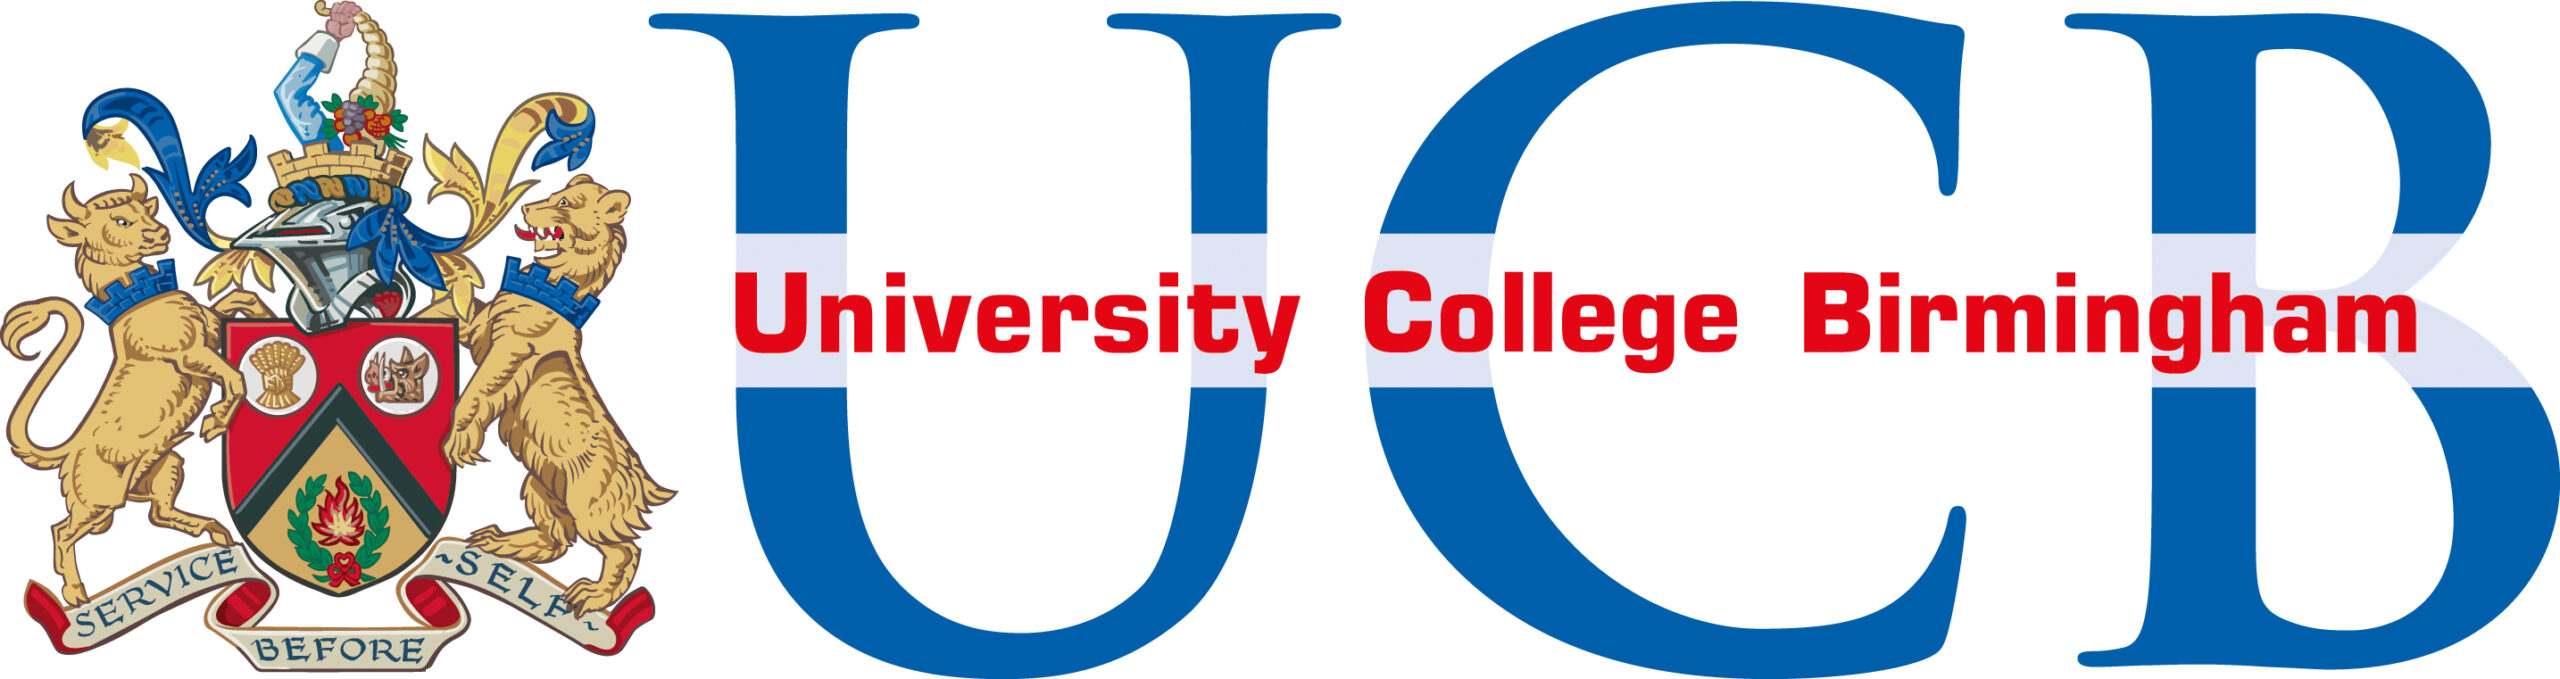 University College Birmingham - Logo